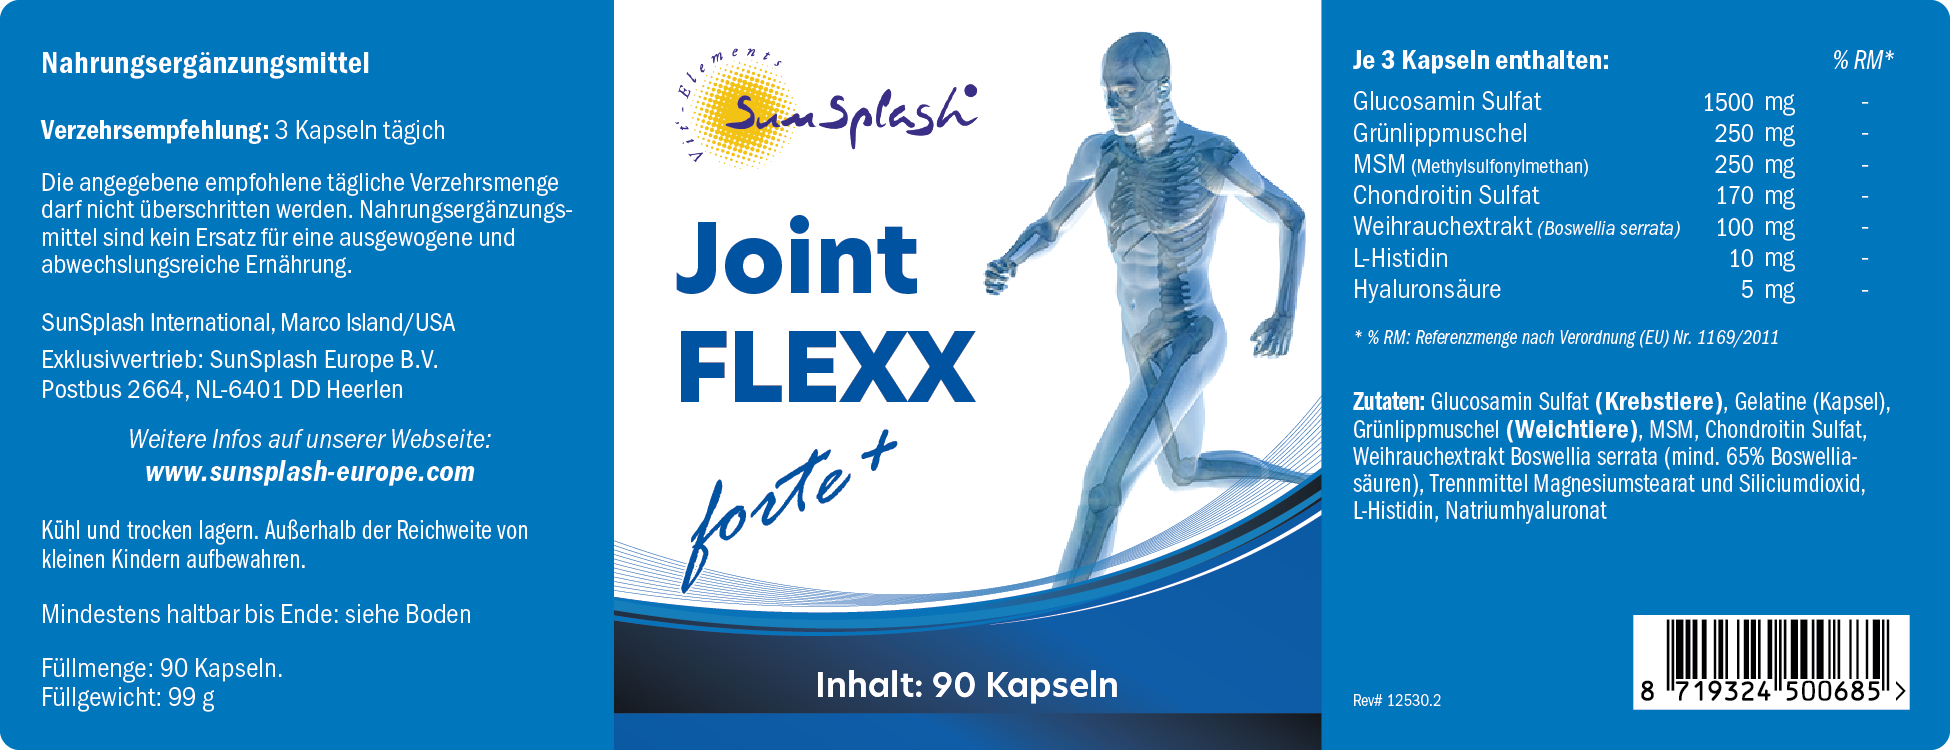 Joint FLEXX forte+ (90 Kaps.)